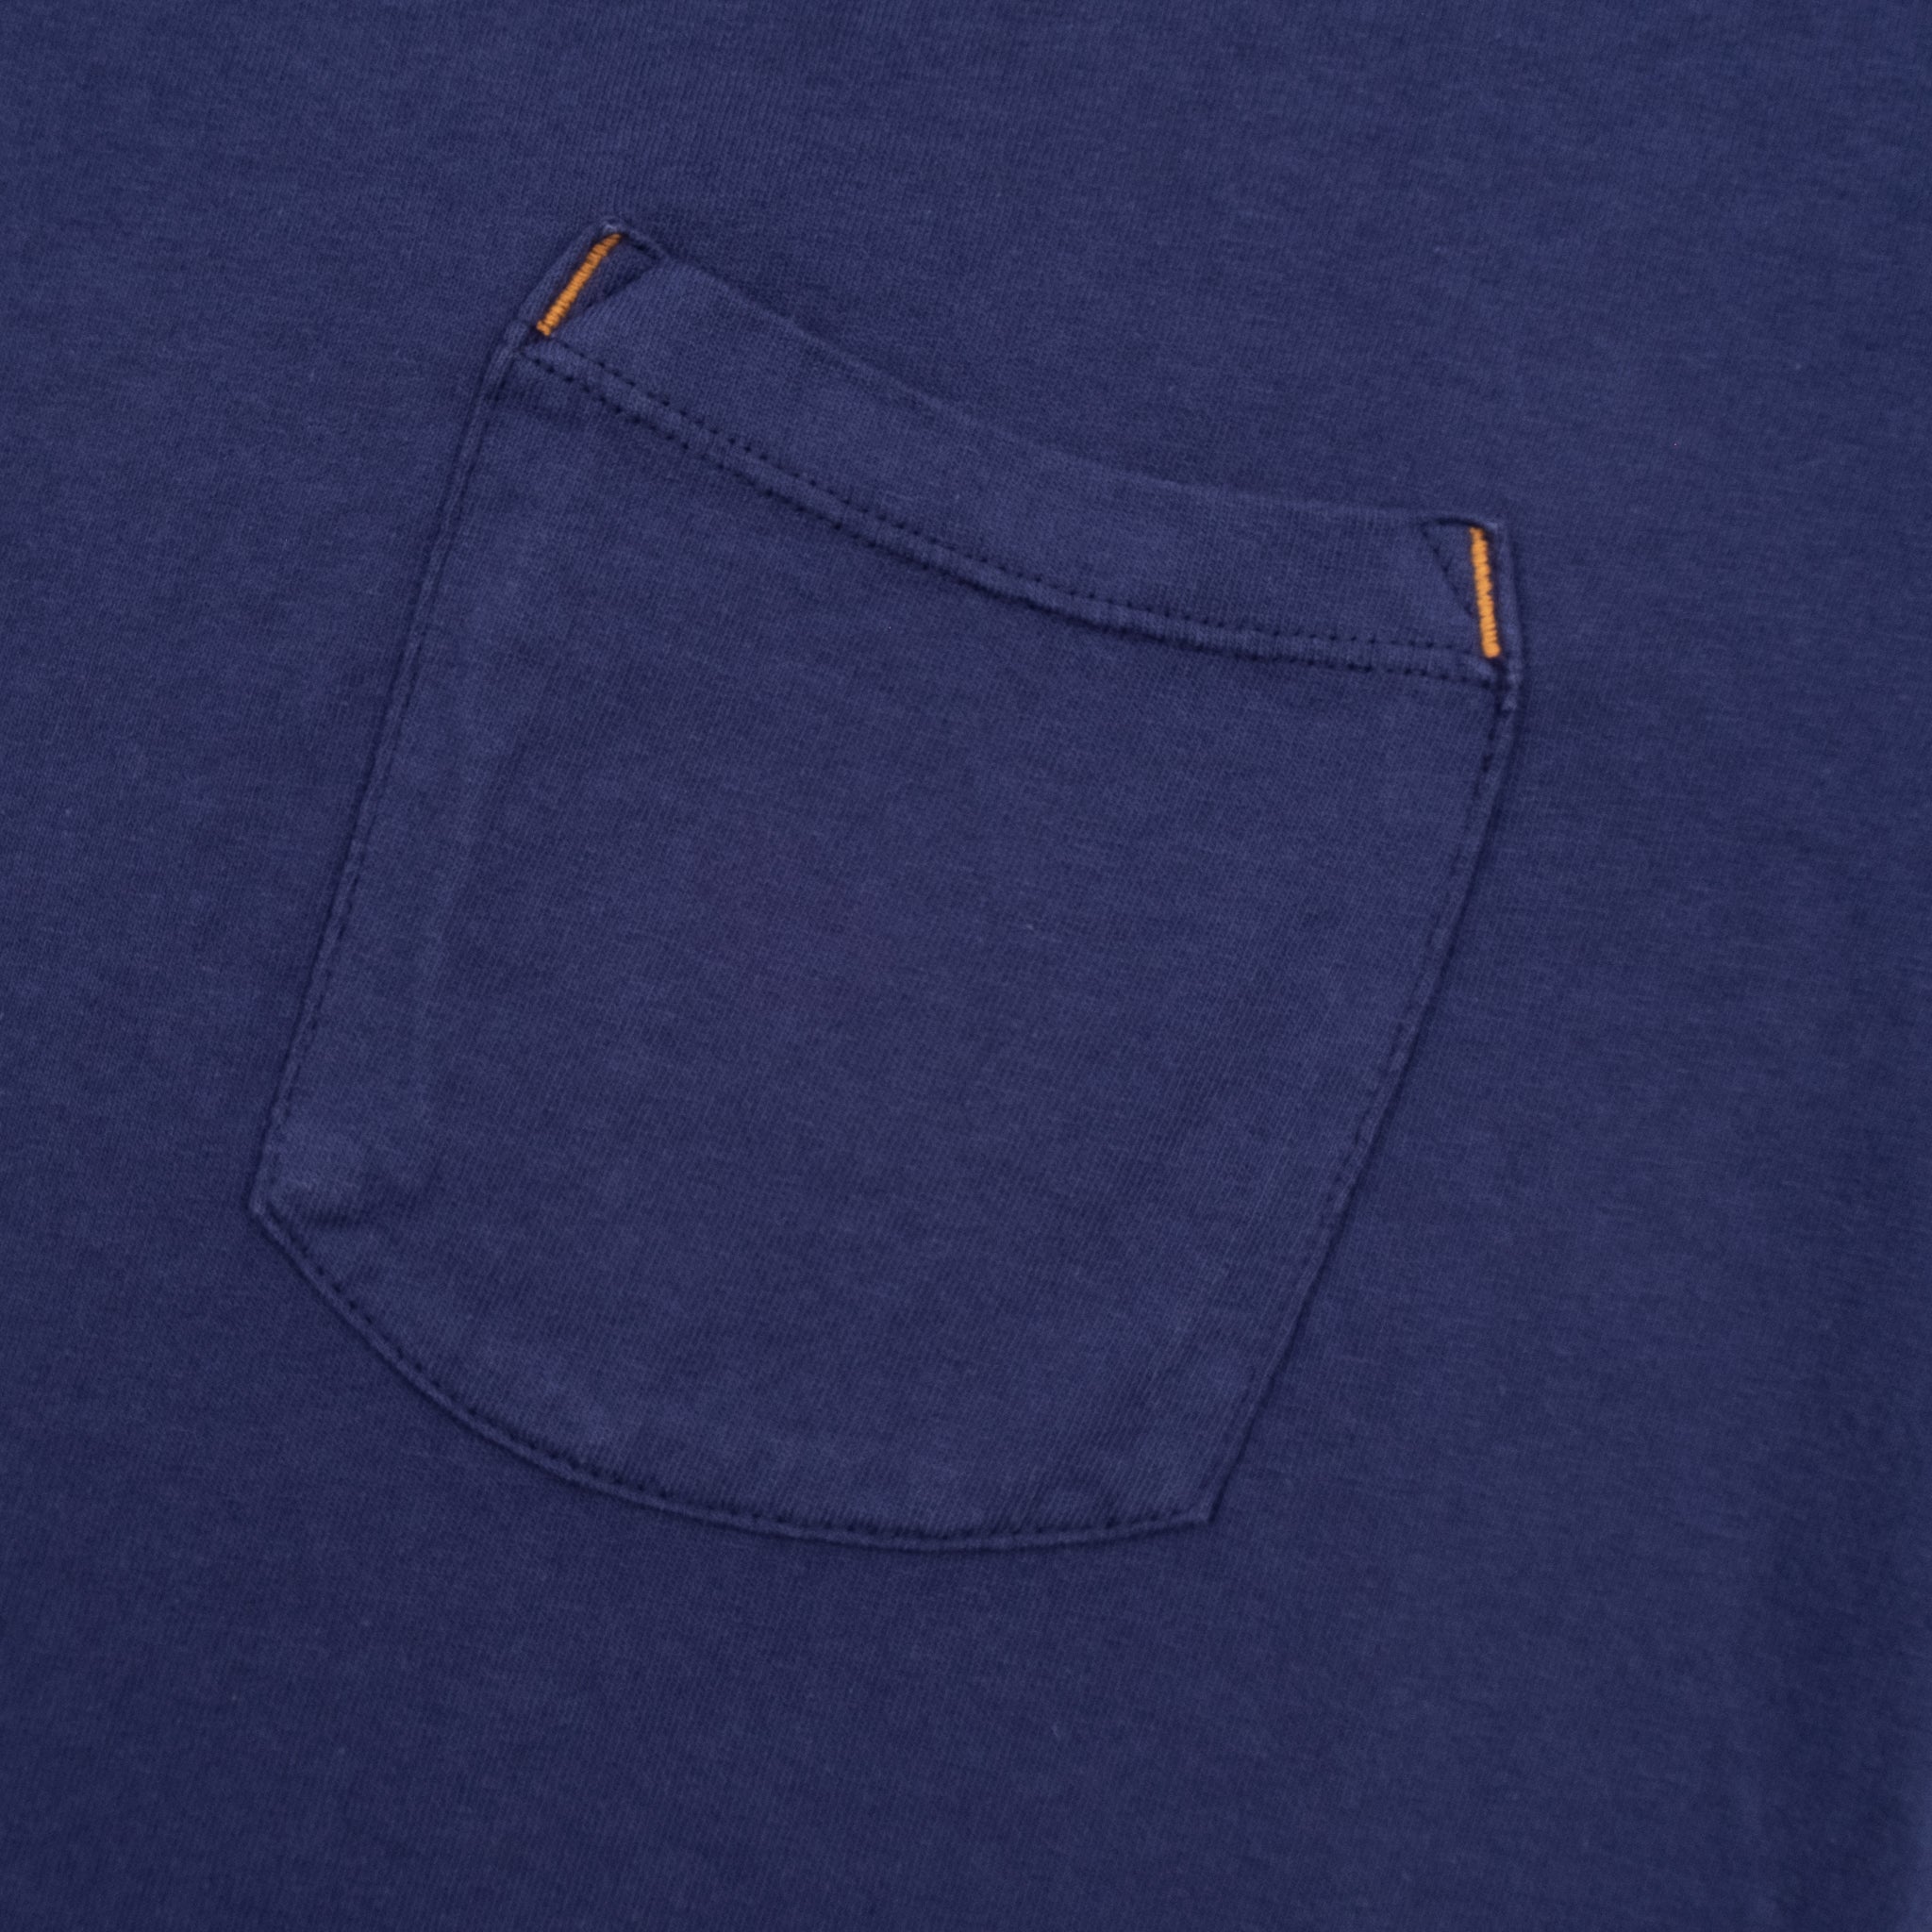 9 Ounce Pocket T-Shirt Navy